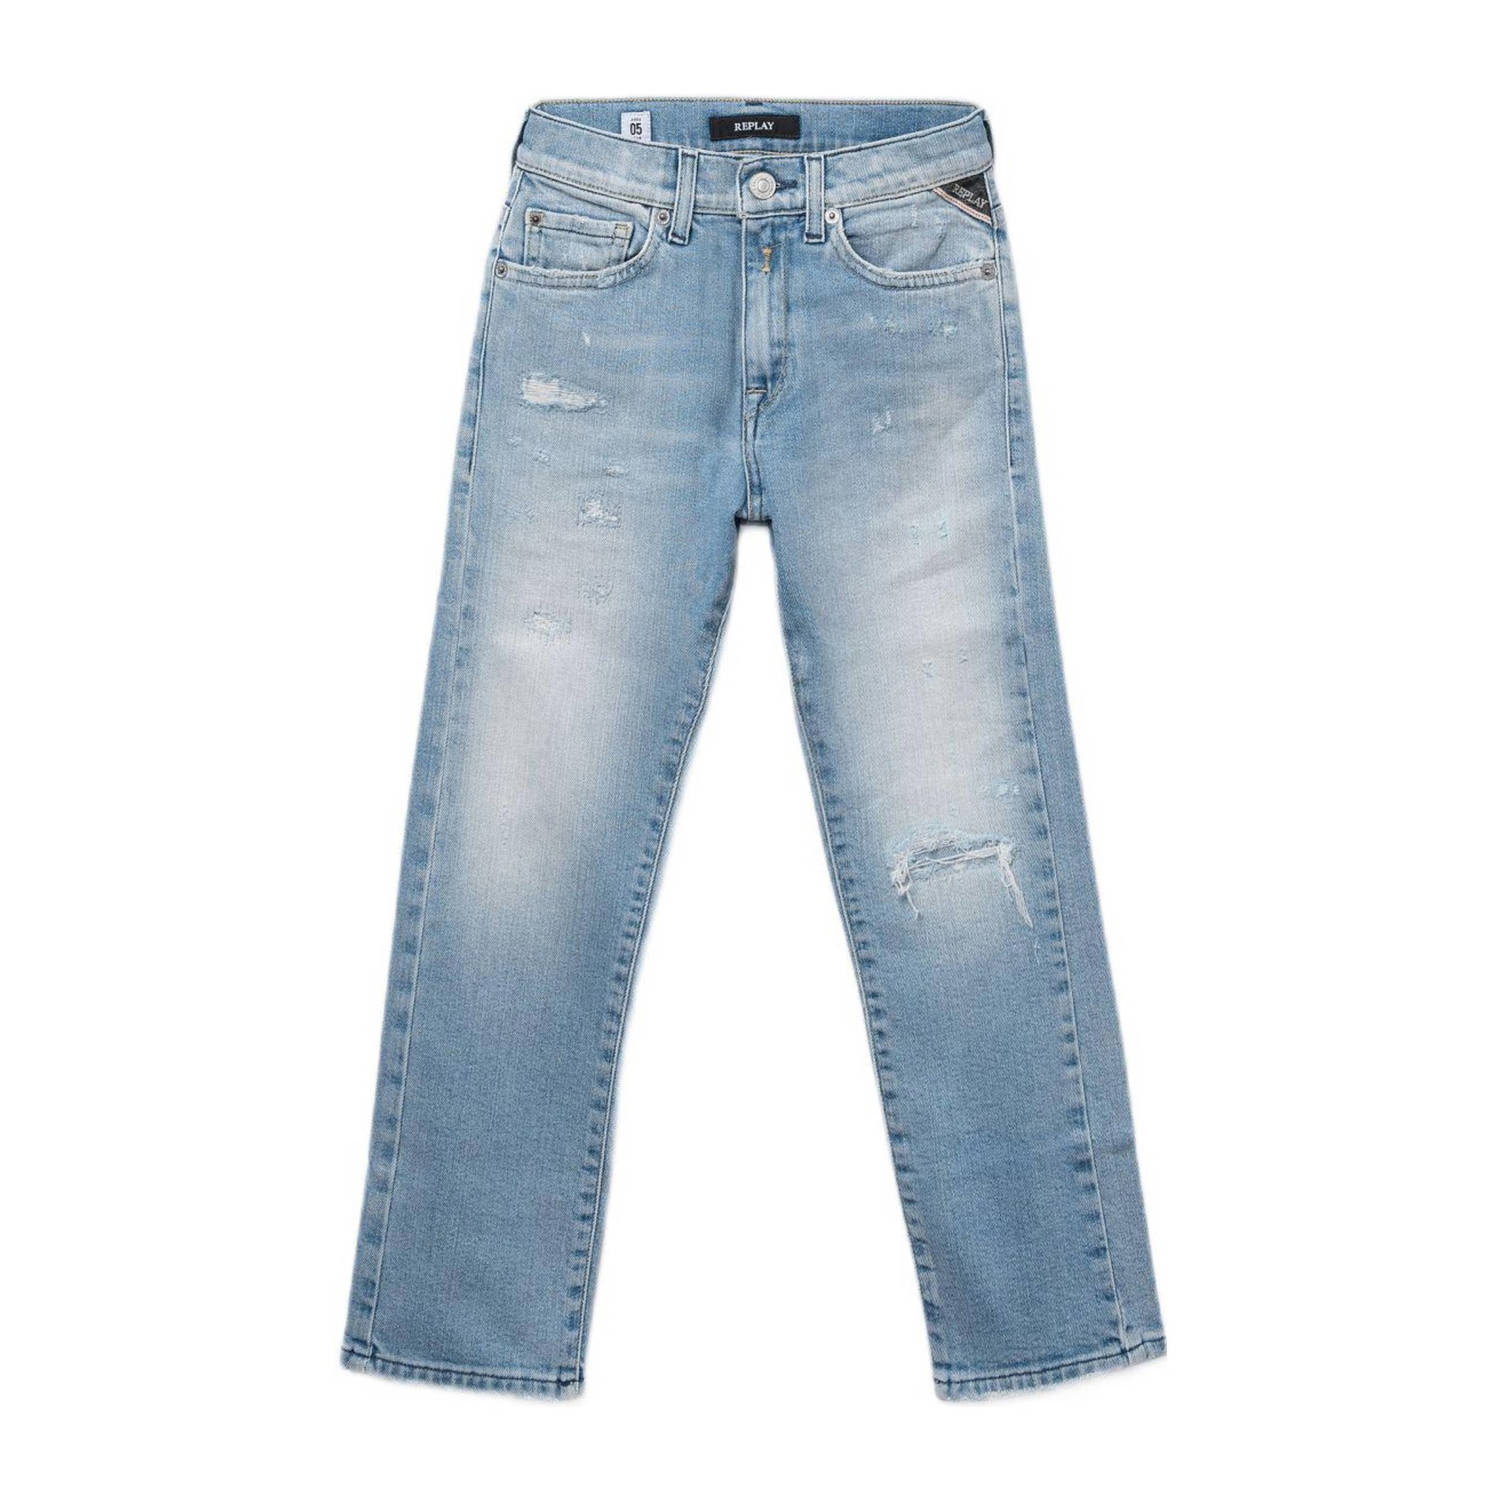 Replay slim fit jeans light blue denim Blauw Effen 176